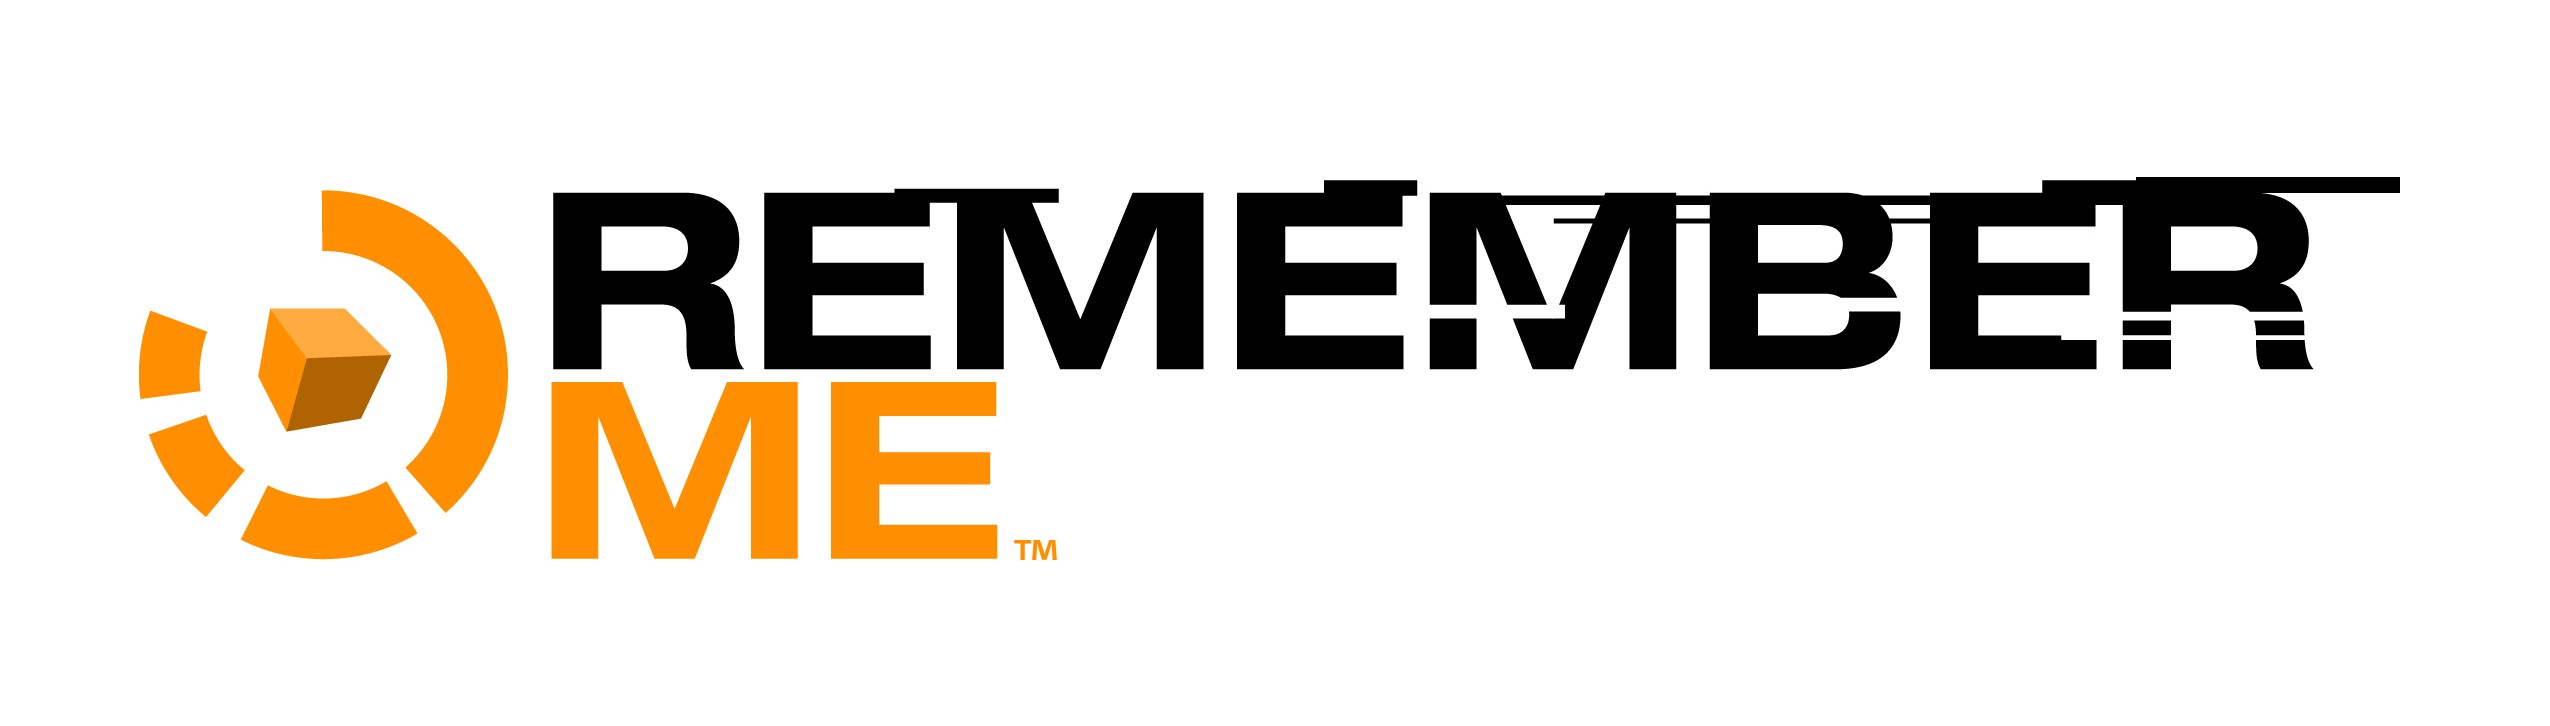 Сайт remember remember get. Remember me logo. Remember me (2013). Репак ми. Remember me icon.